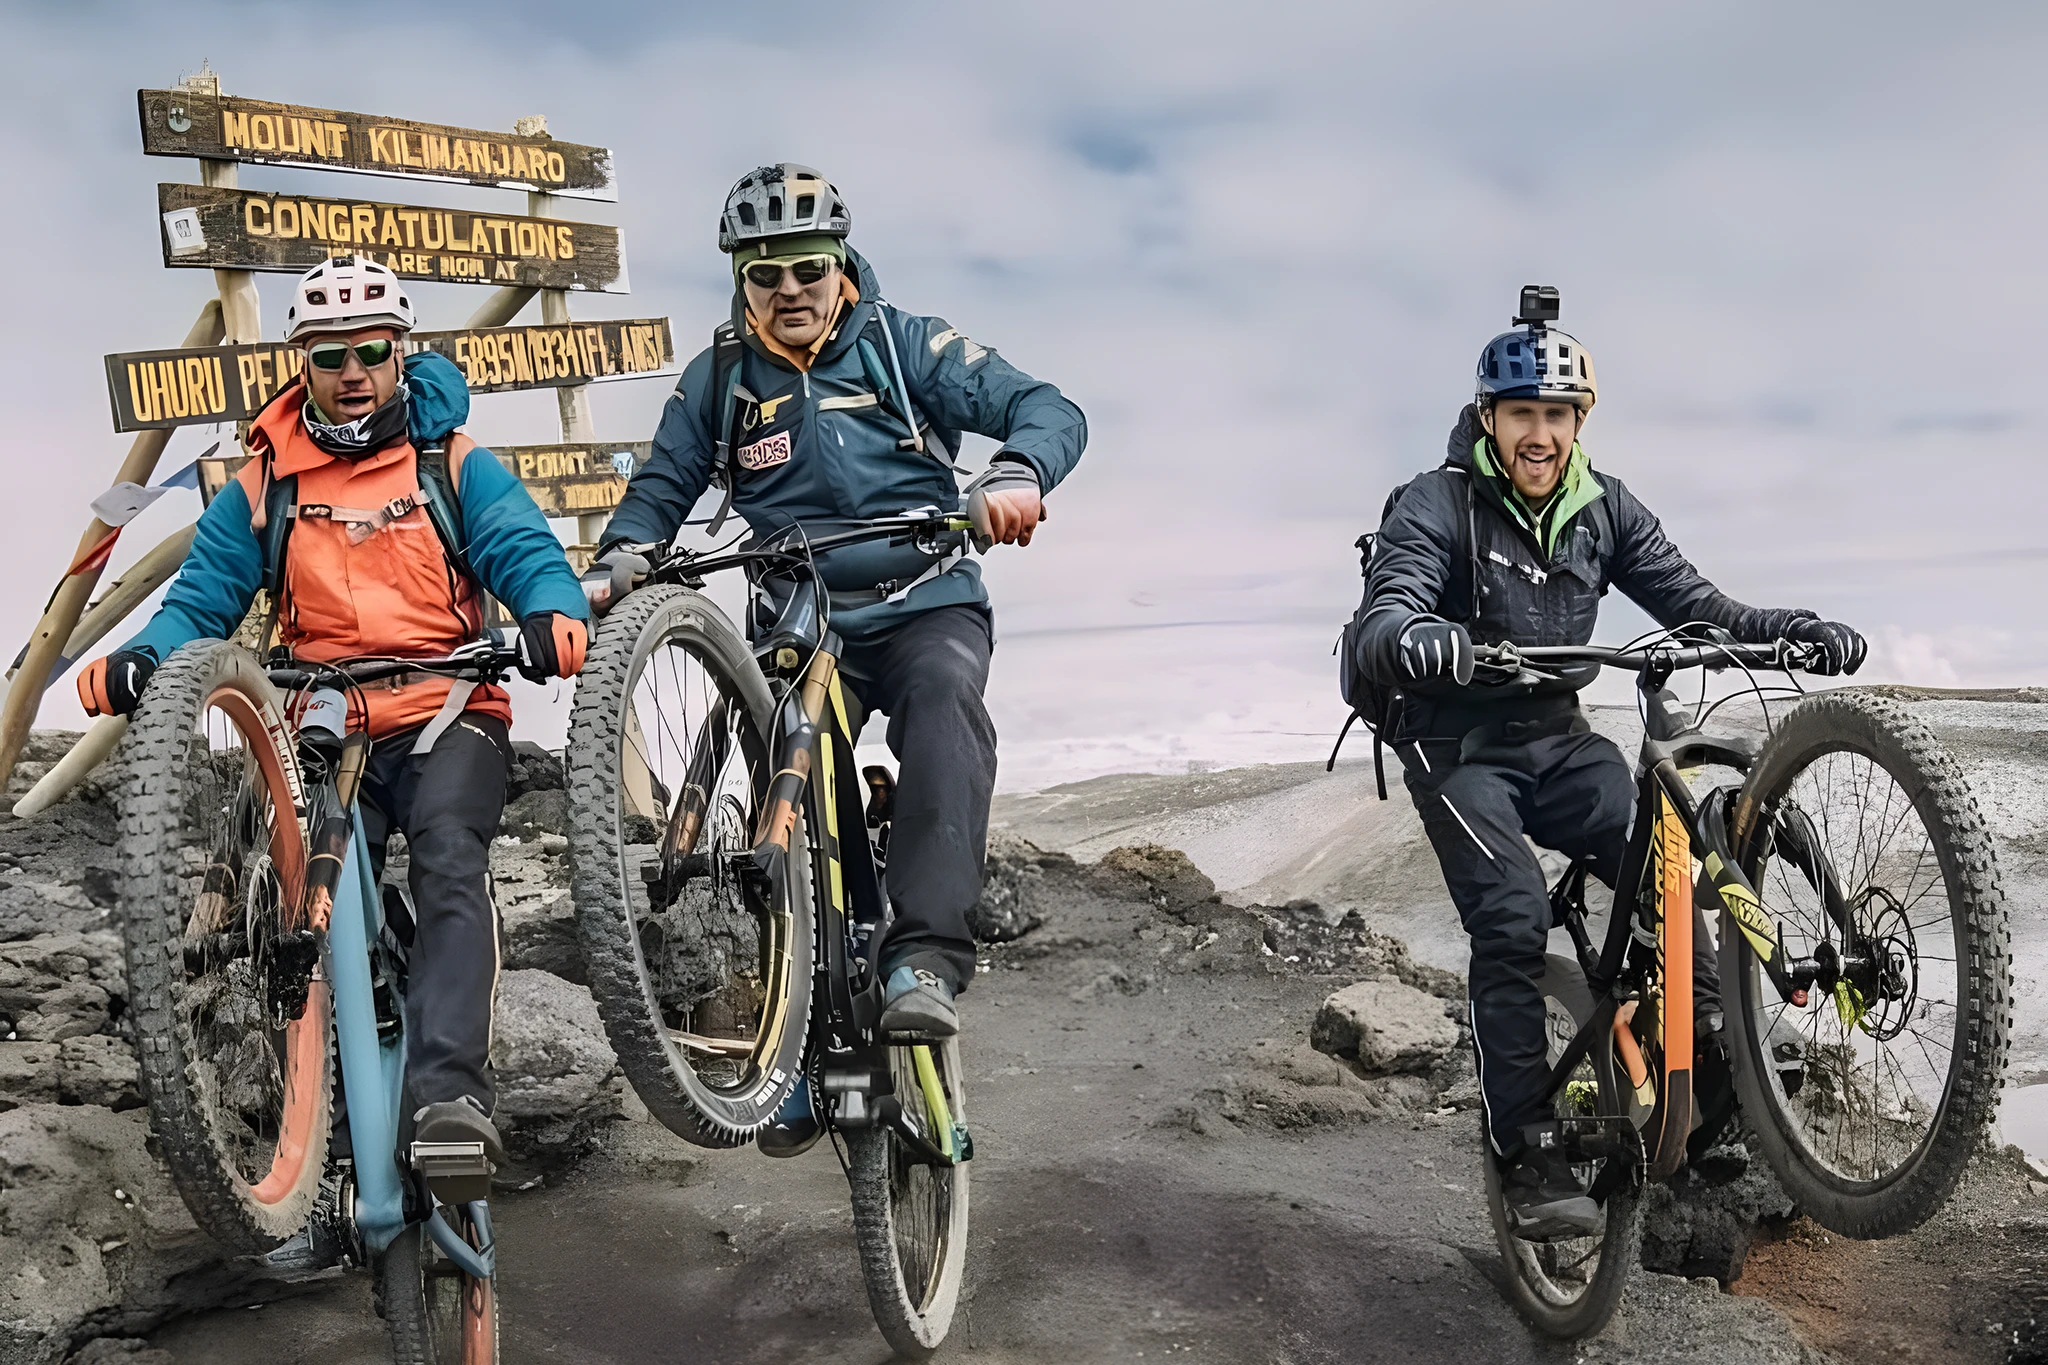 West Kilimanjaro Cycling Adventures